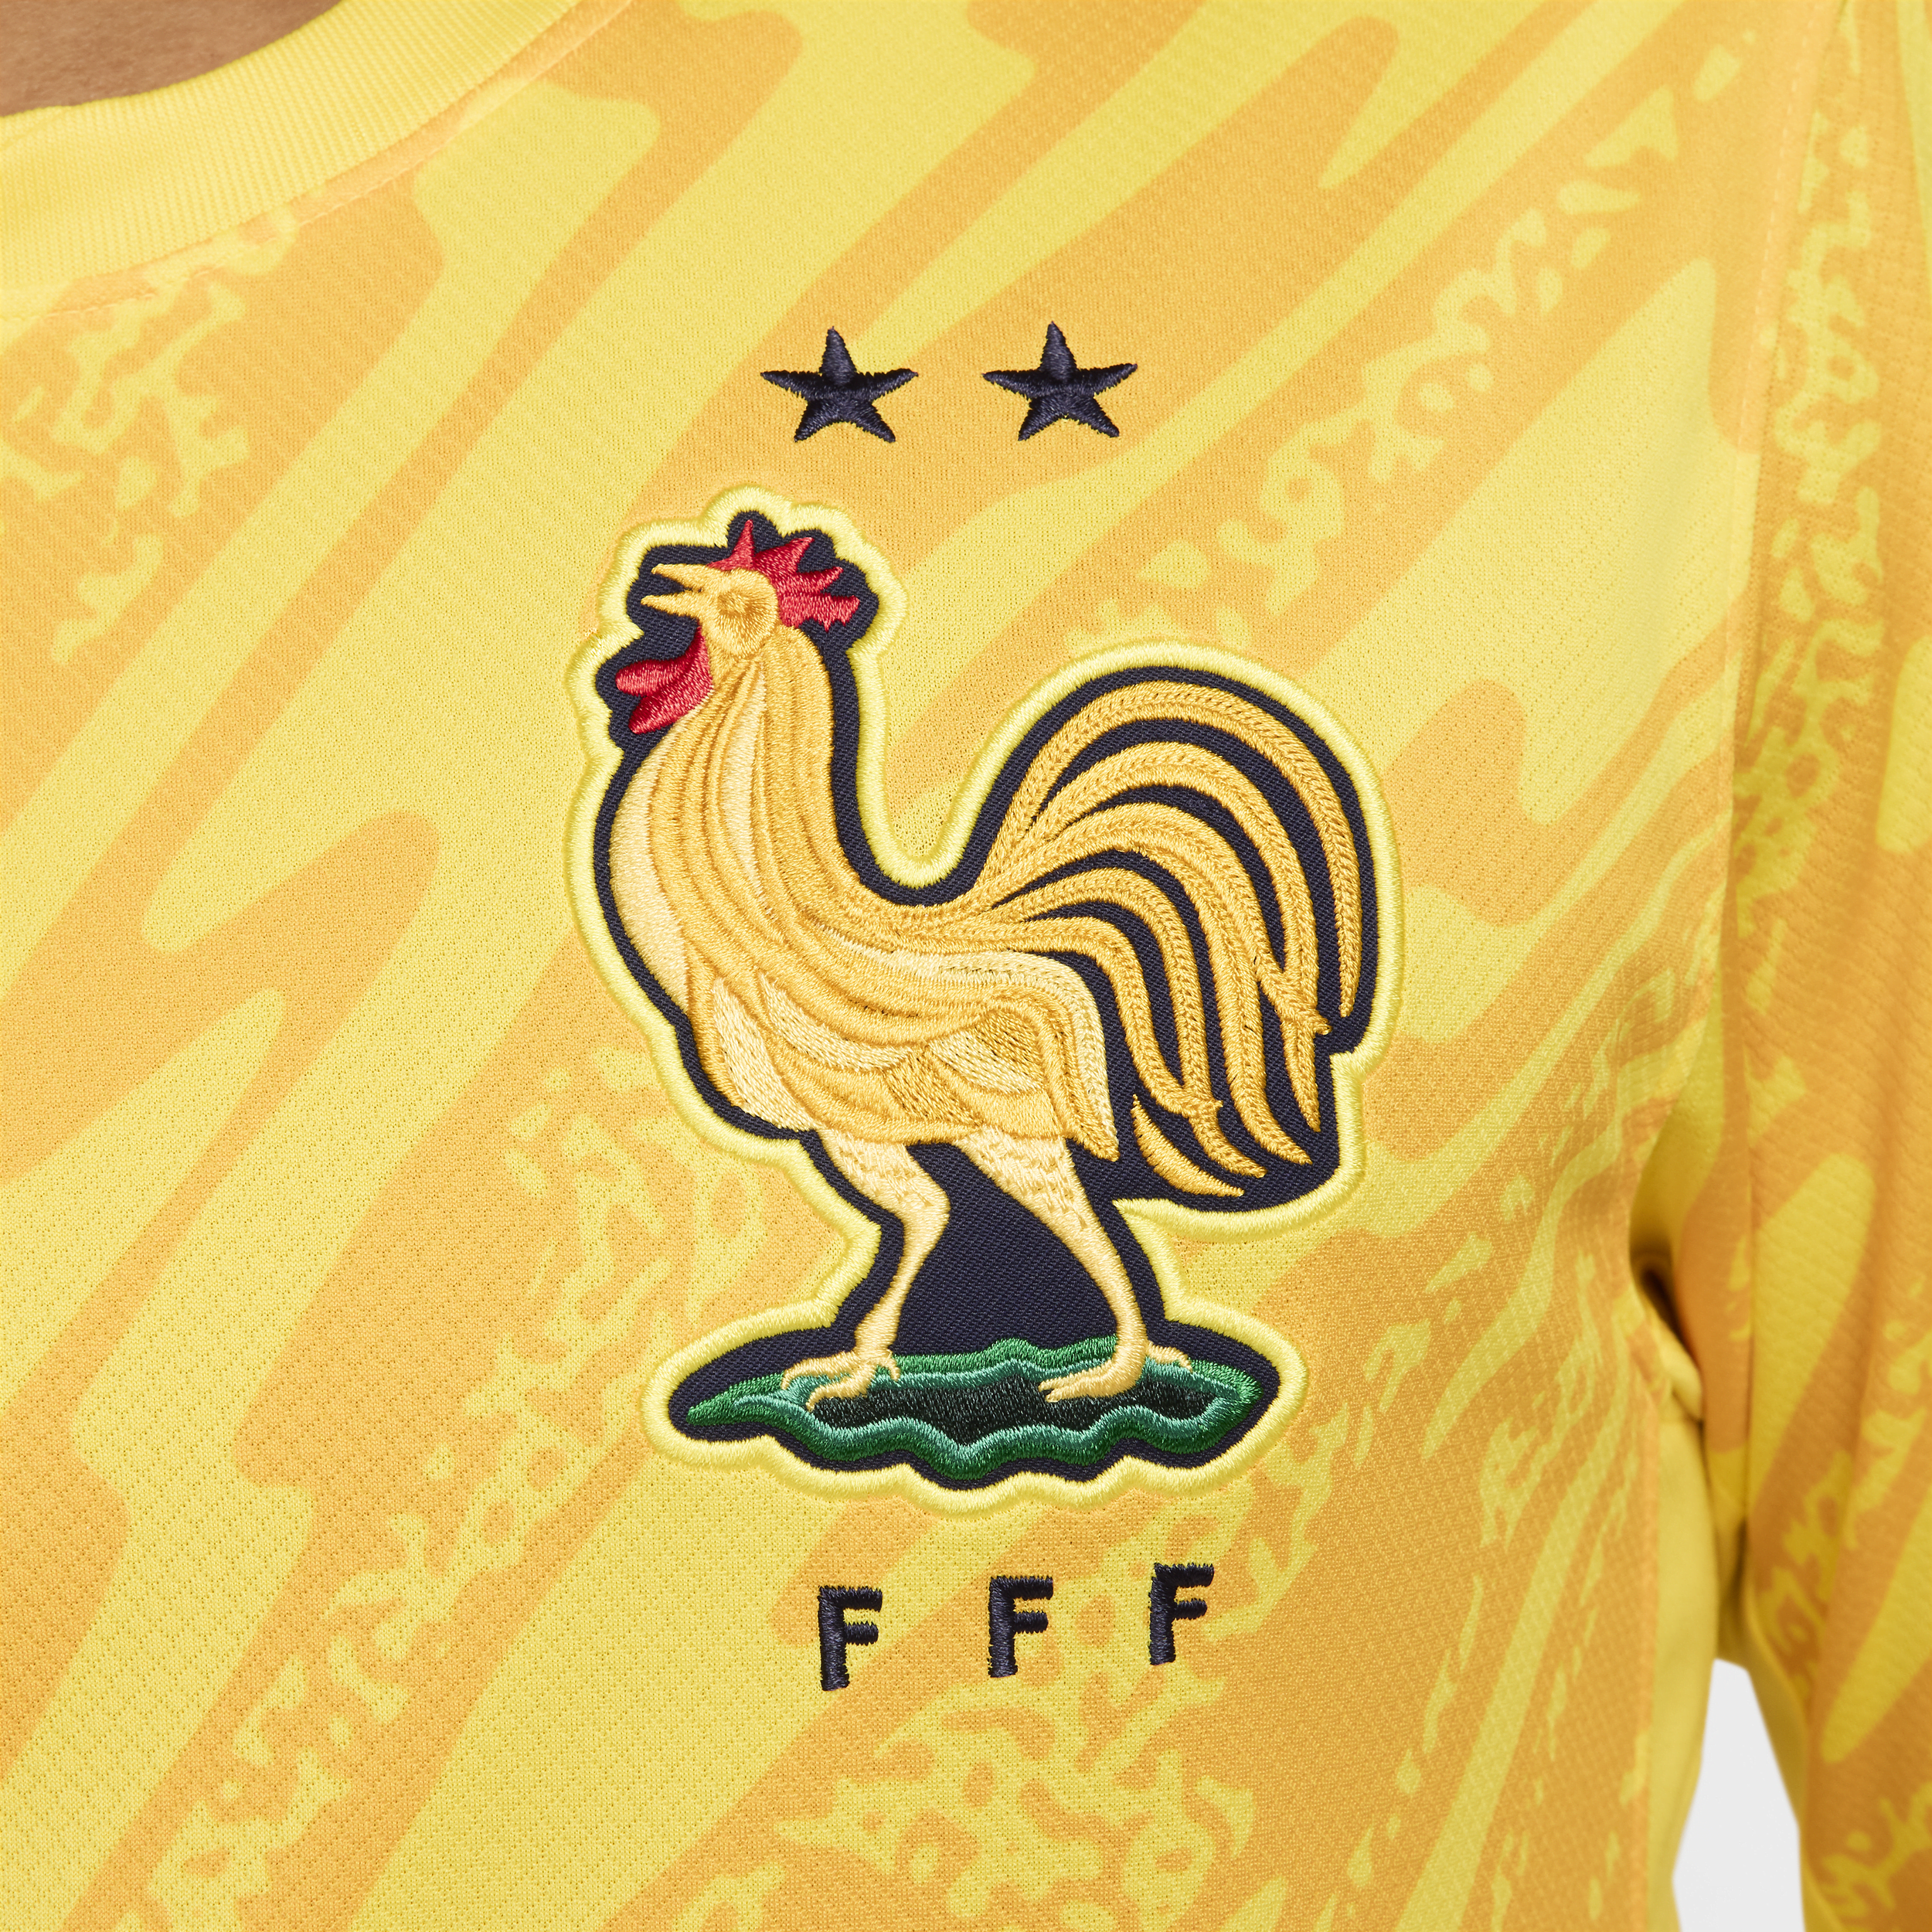 Nike FFF (herenelftal) 2024 25 Stadium Goalkeeper Dri-FIT replica voetbalshirt voor heren Geel